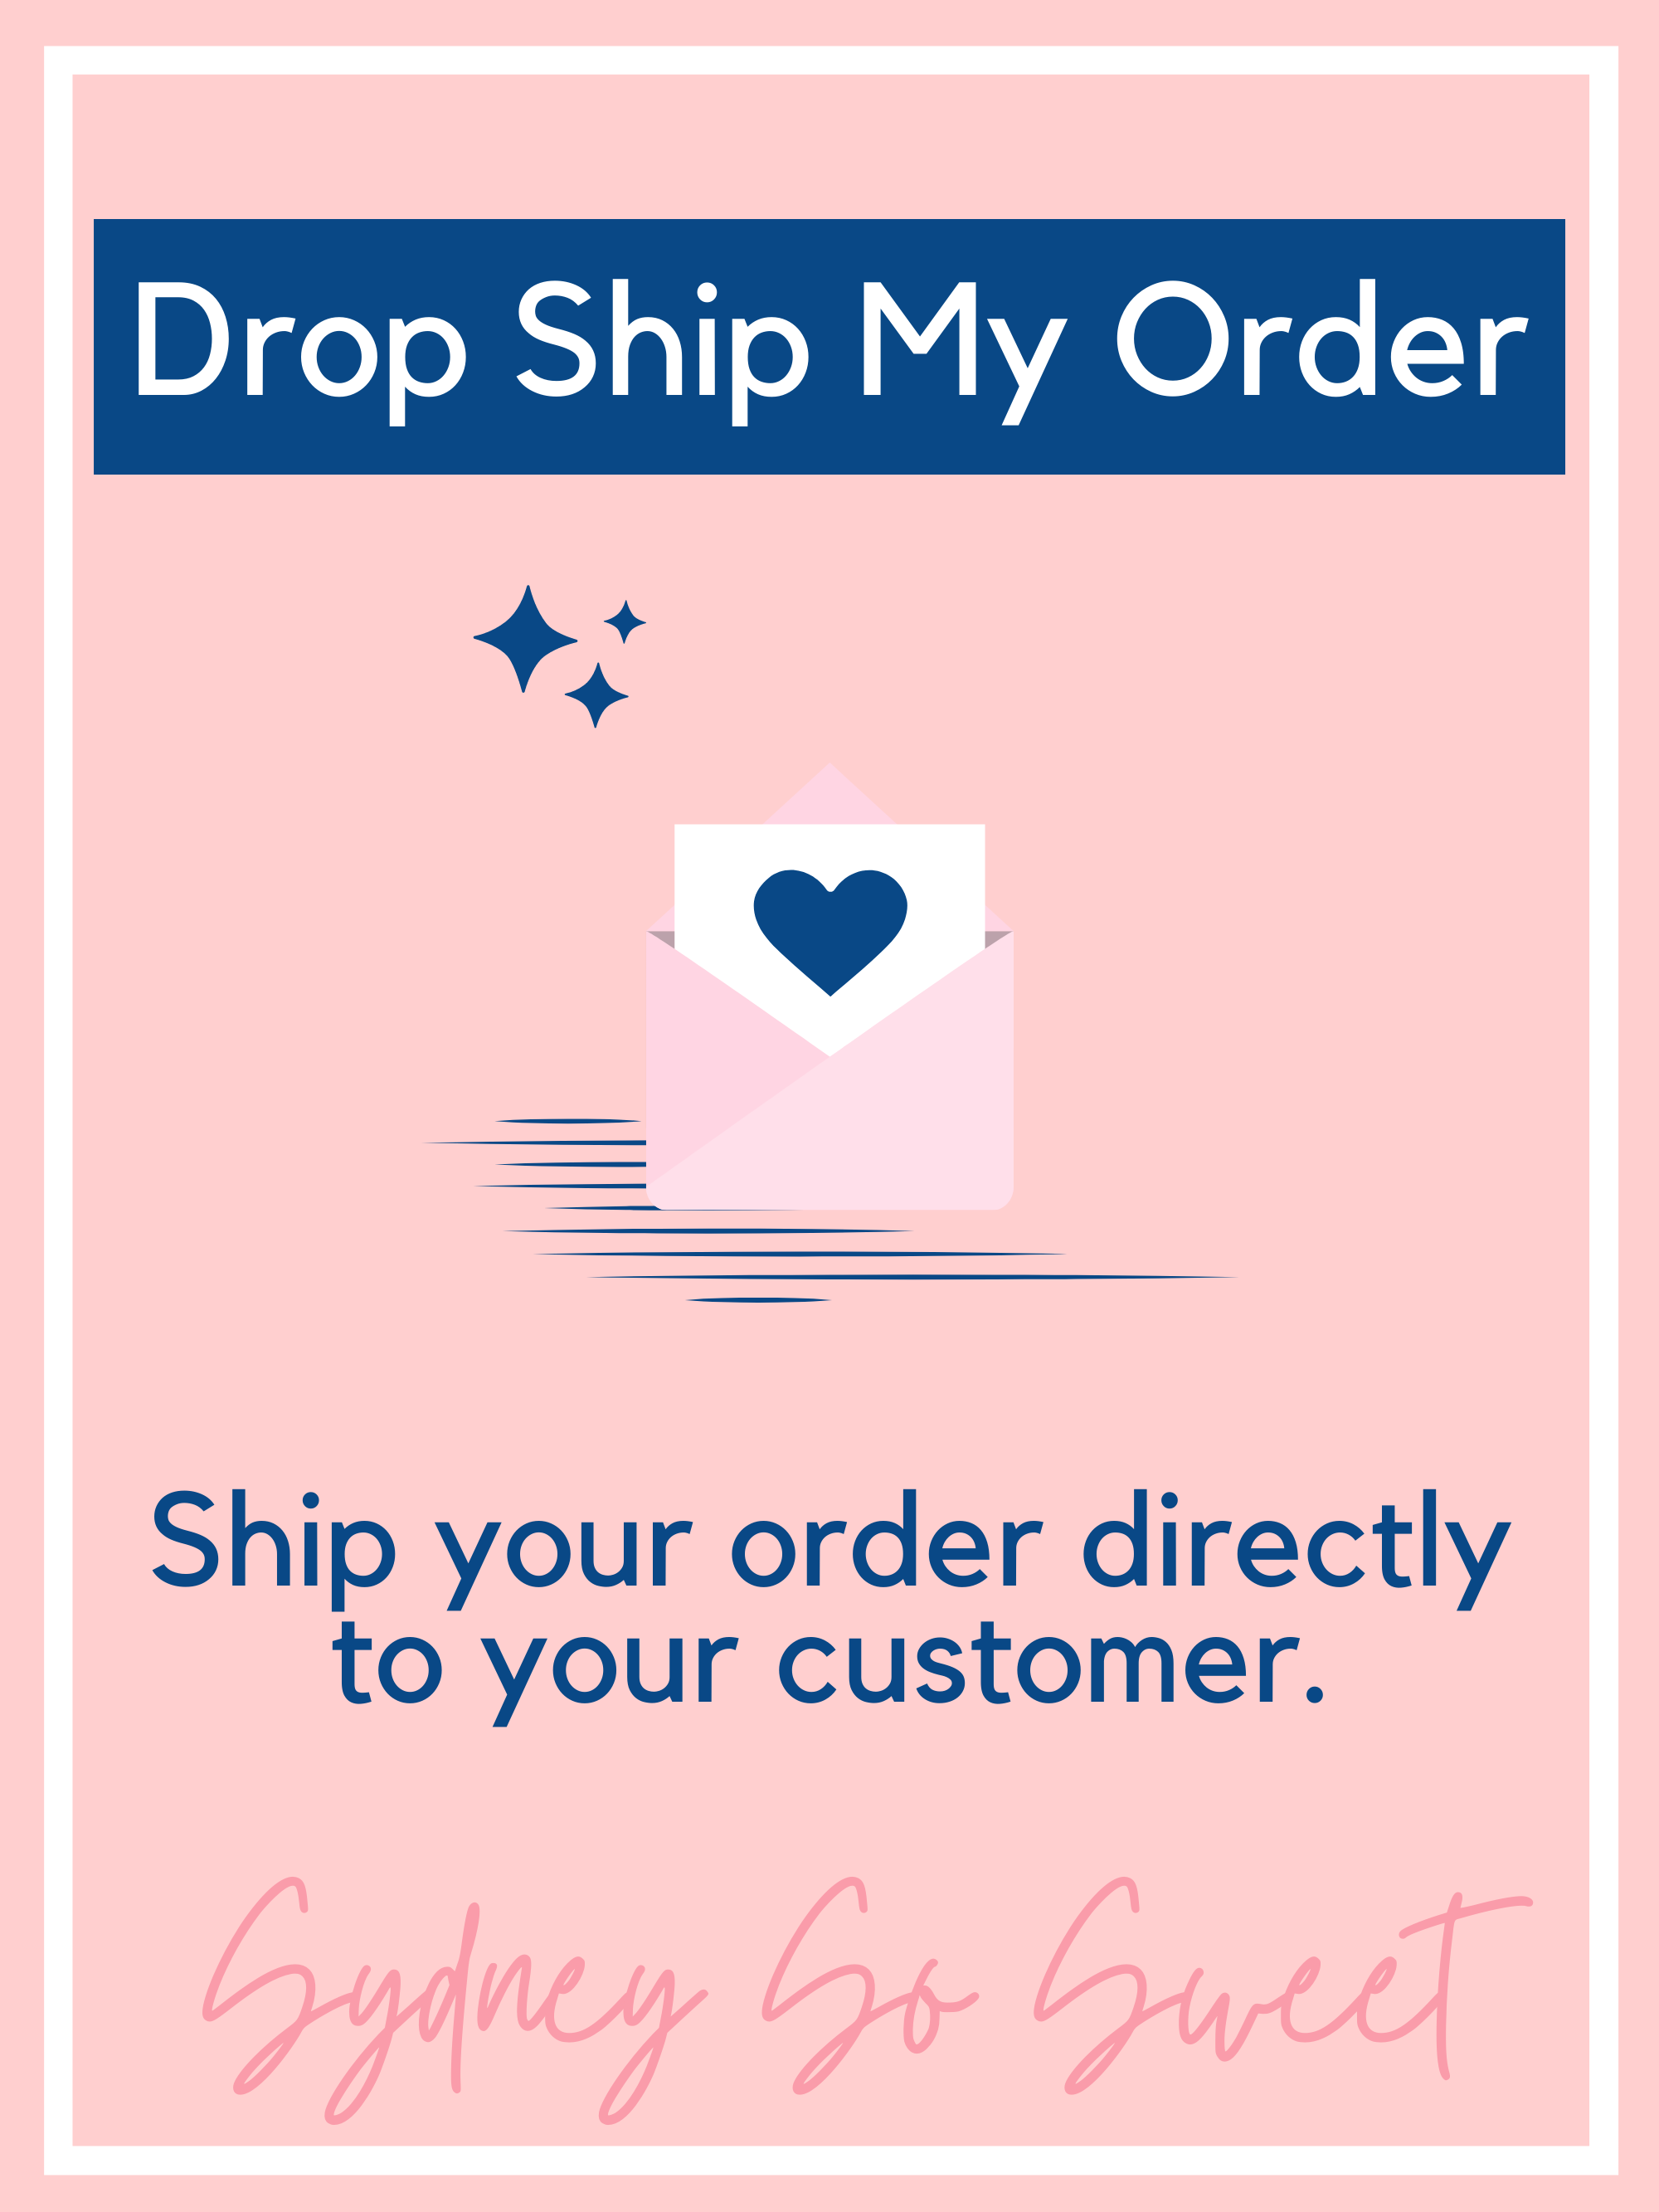 Drop Ship My Order - Sydney So Sweet